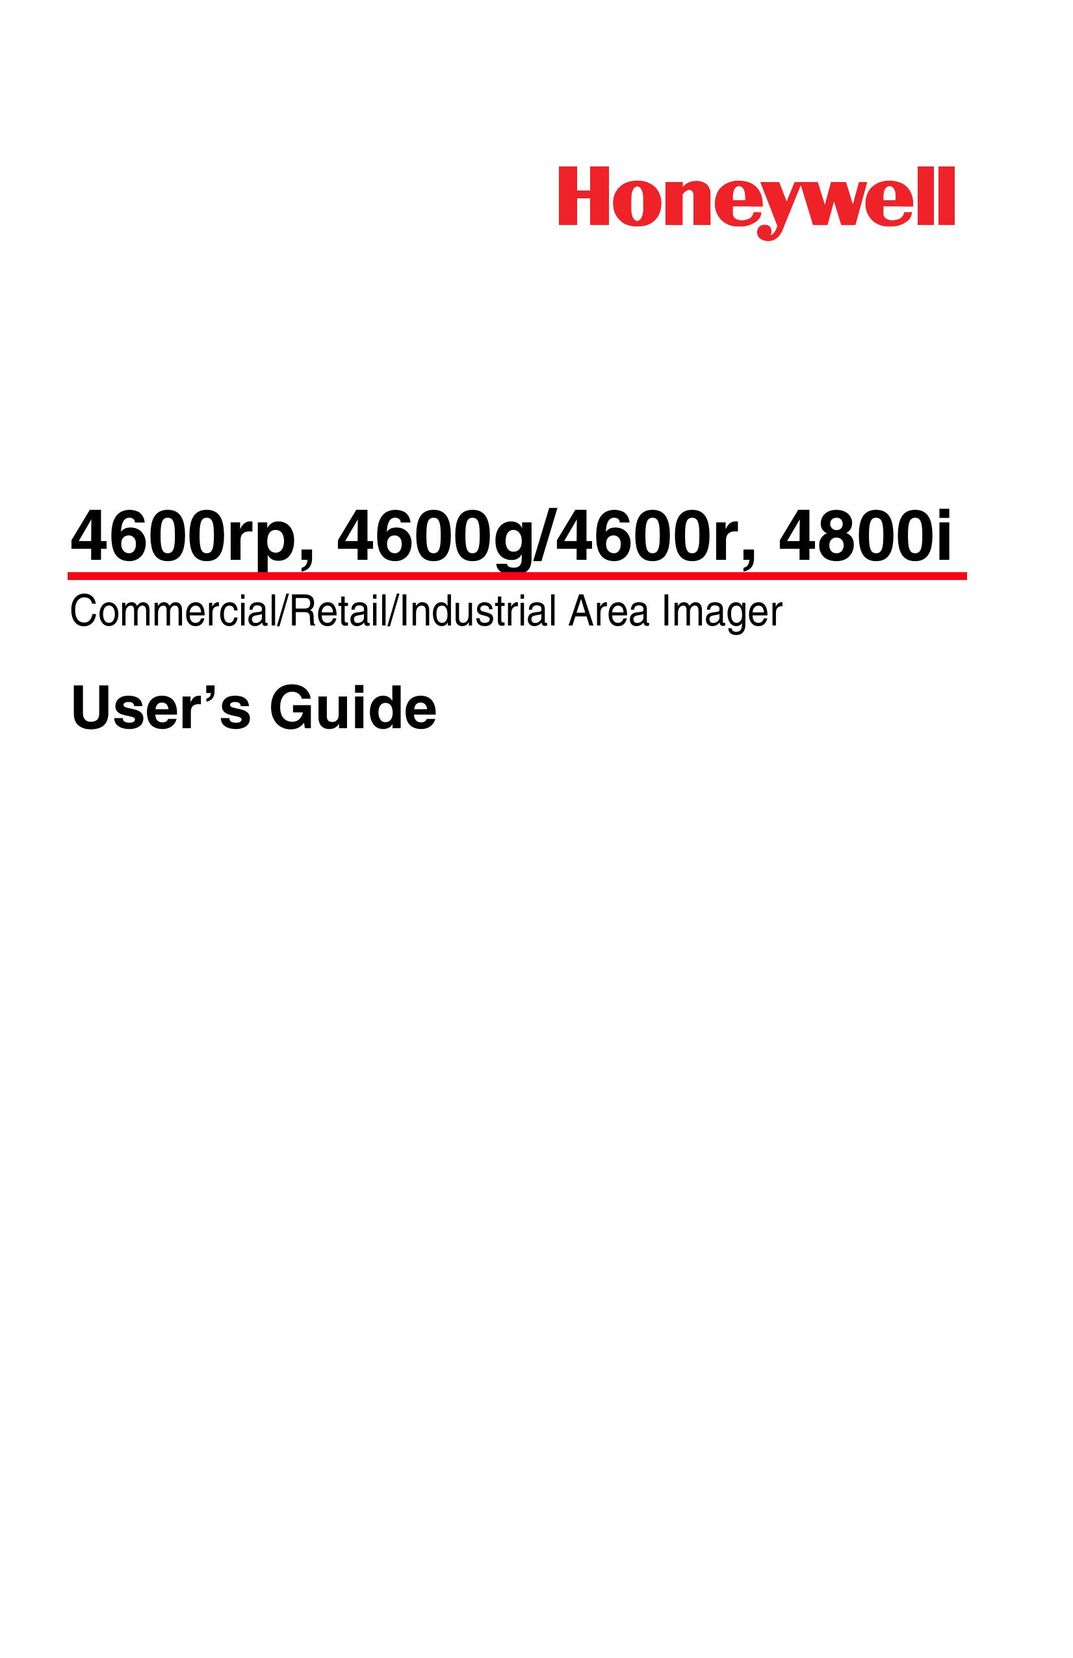 HandHeld Entertainment 4800i Scanner User Manual